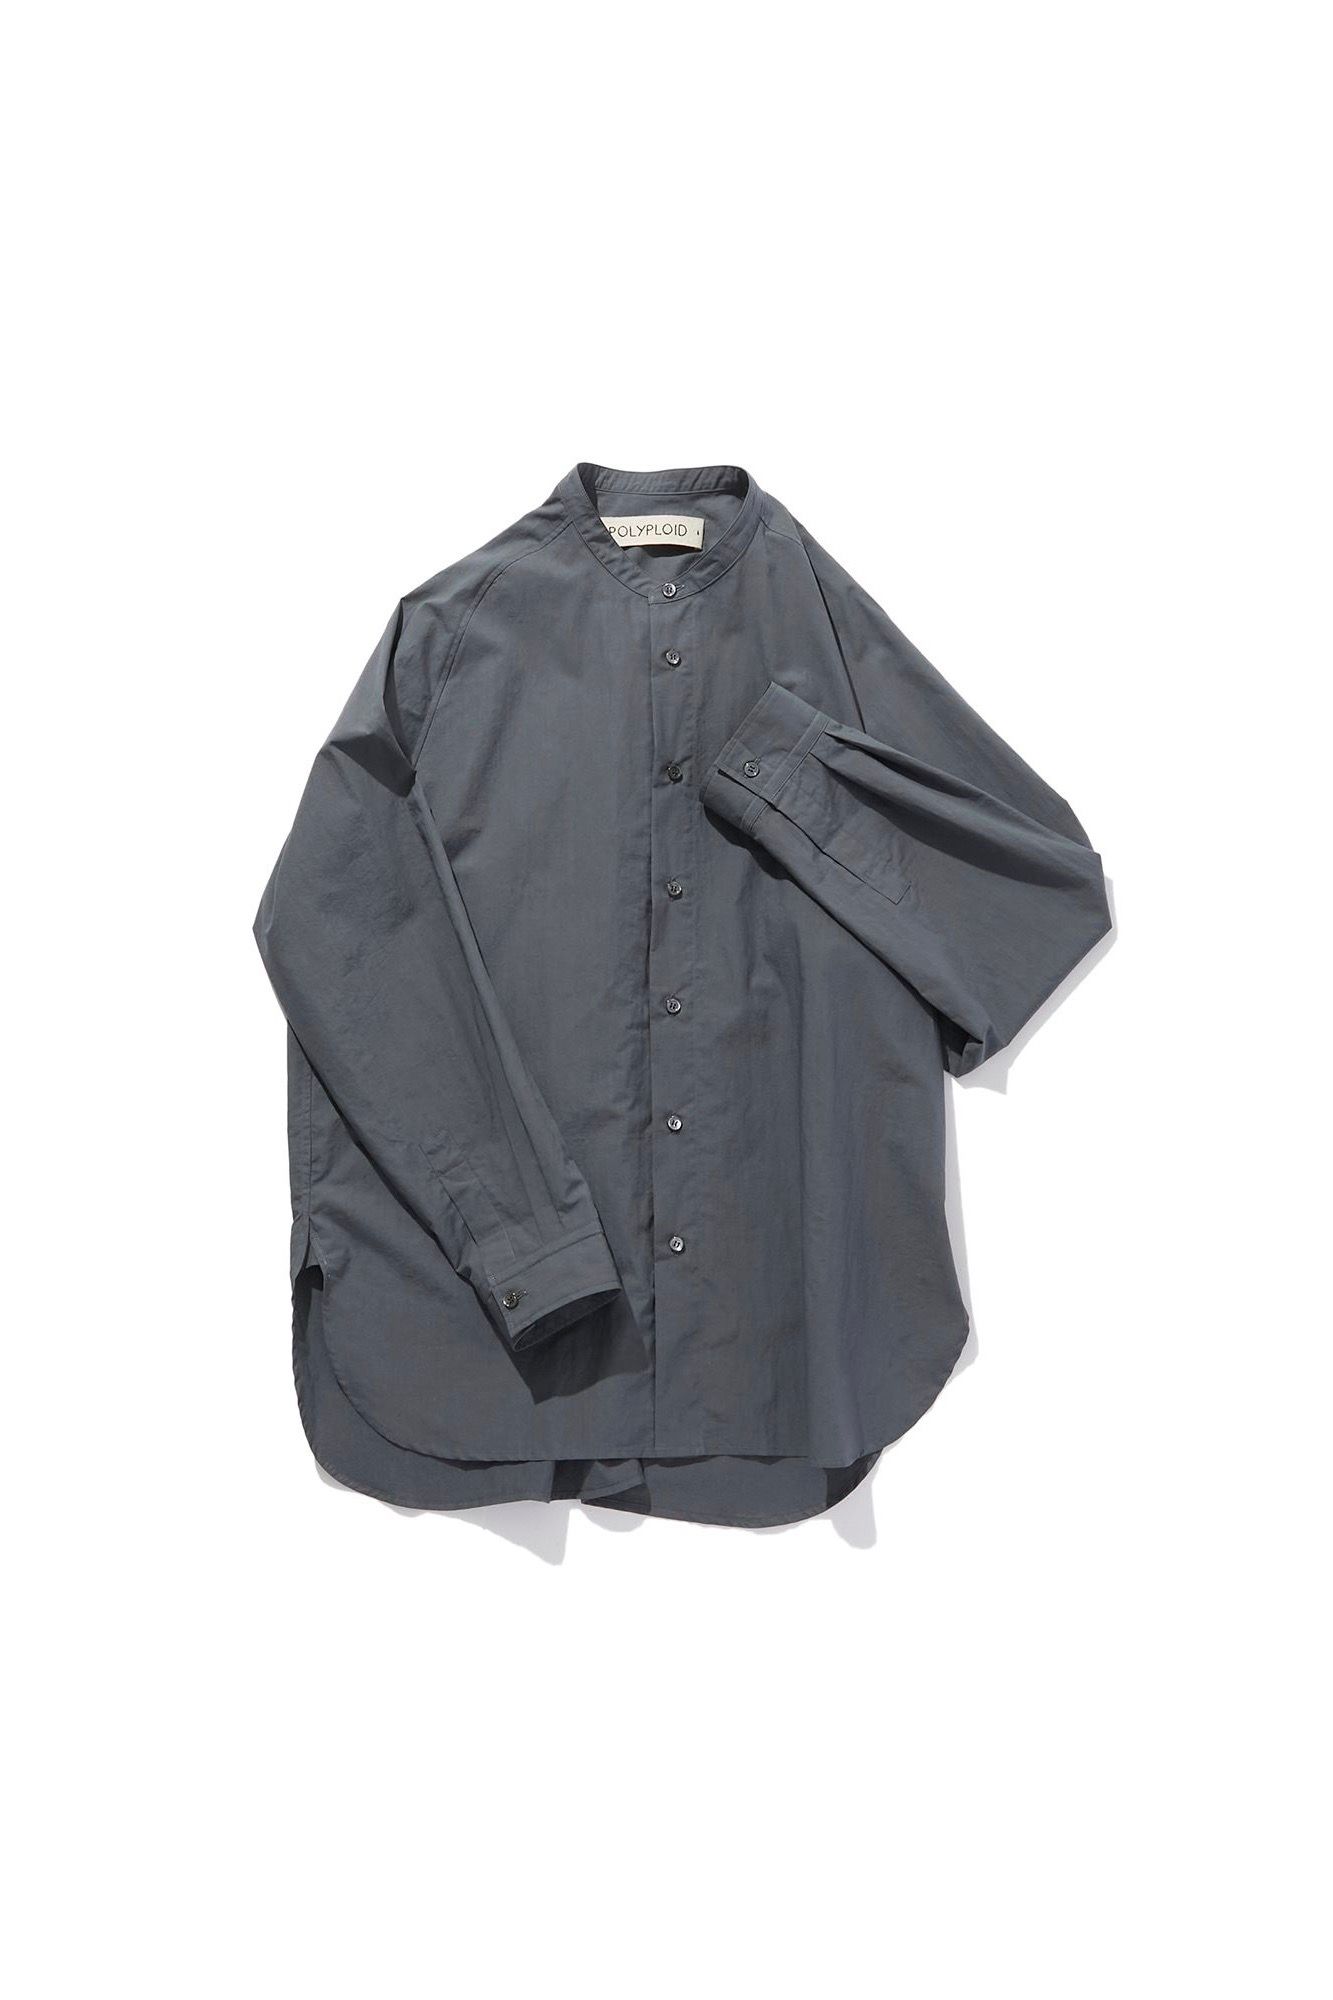 POLYPLOID - raglan stand collar shirts c -grey- 22ss | asterisk